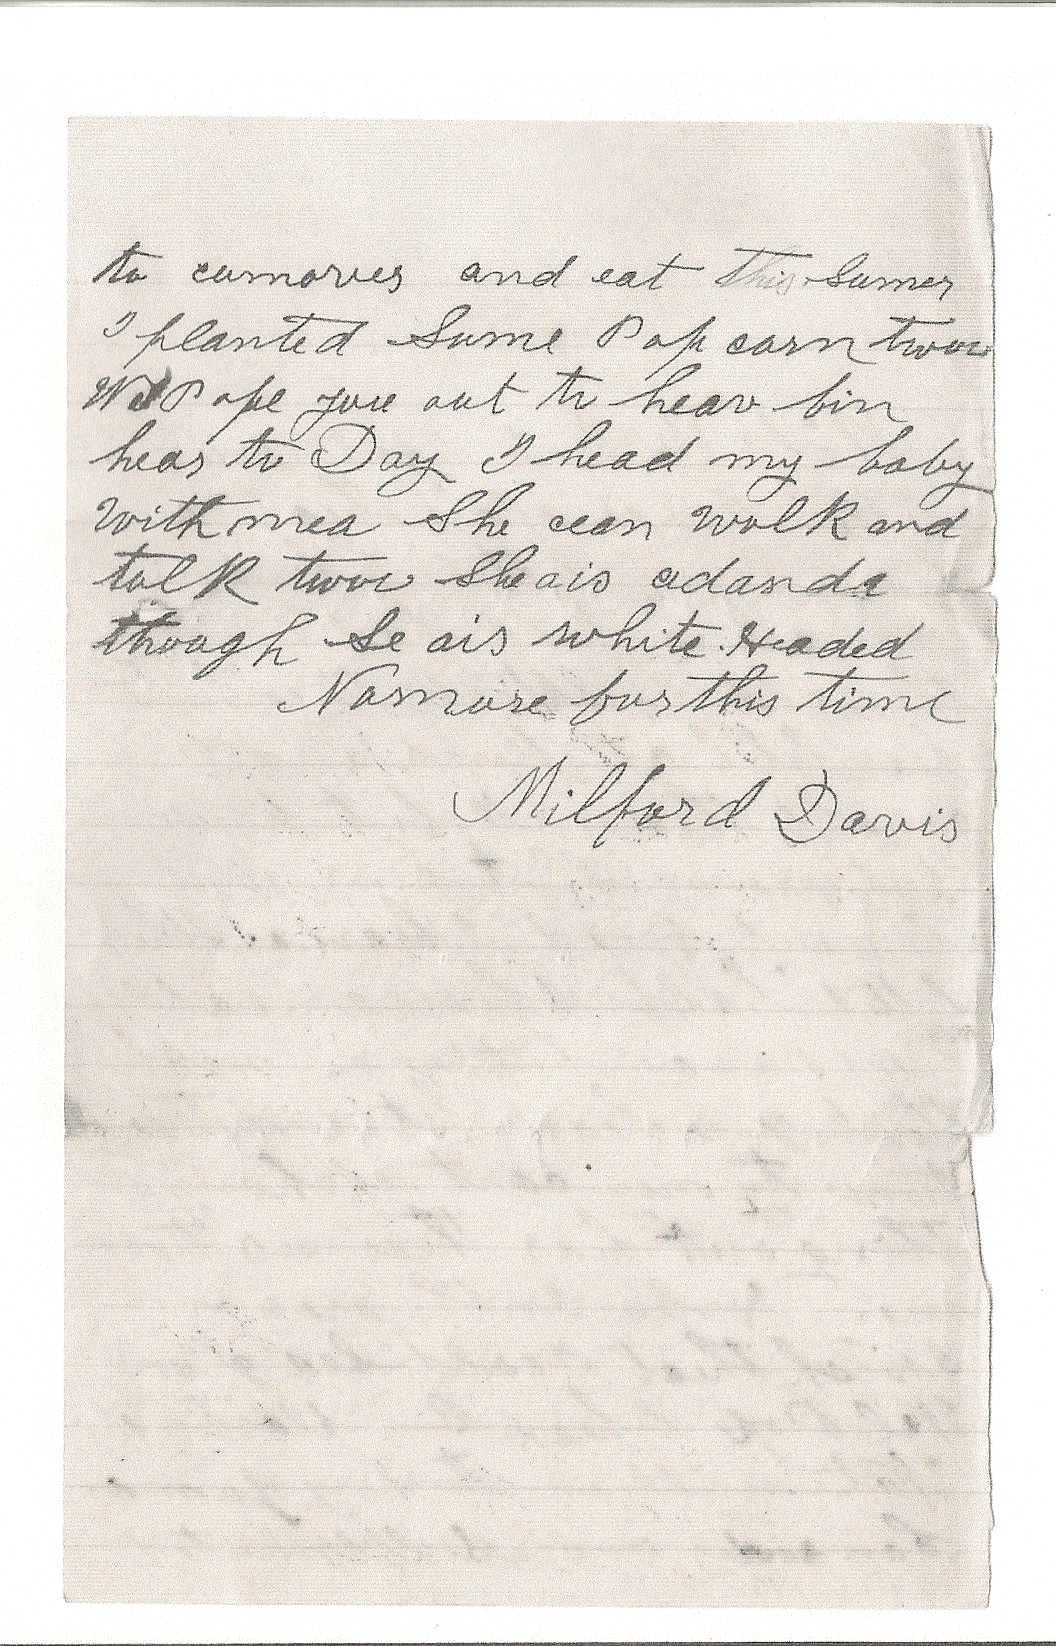 Reason Milford Sr. letter to Joseph Adams Pope no date